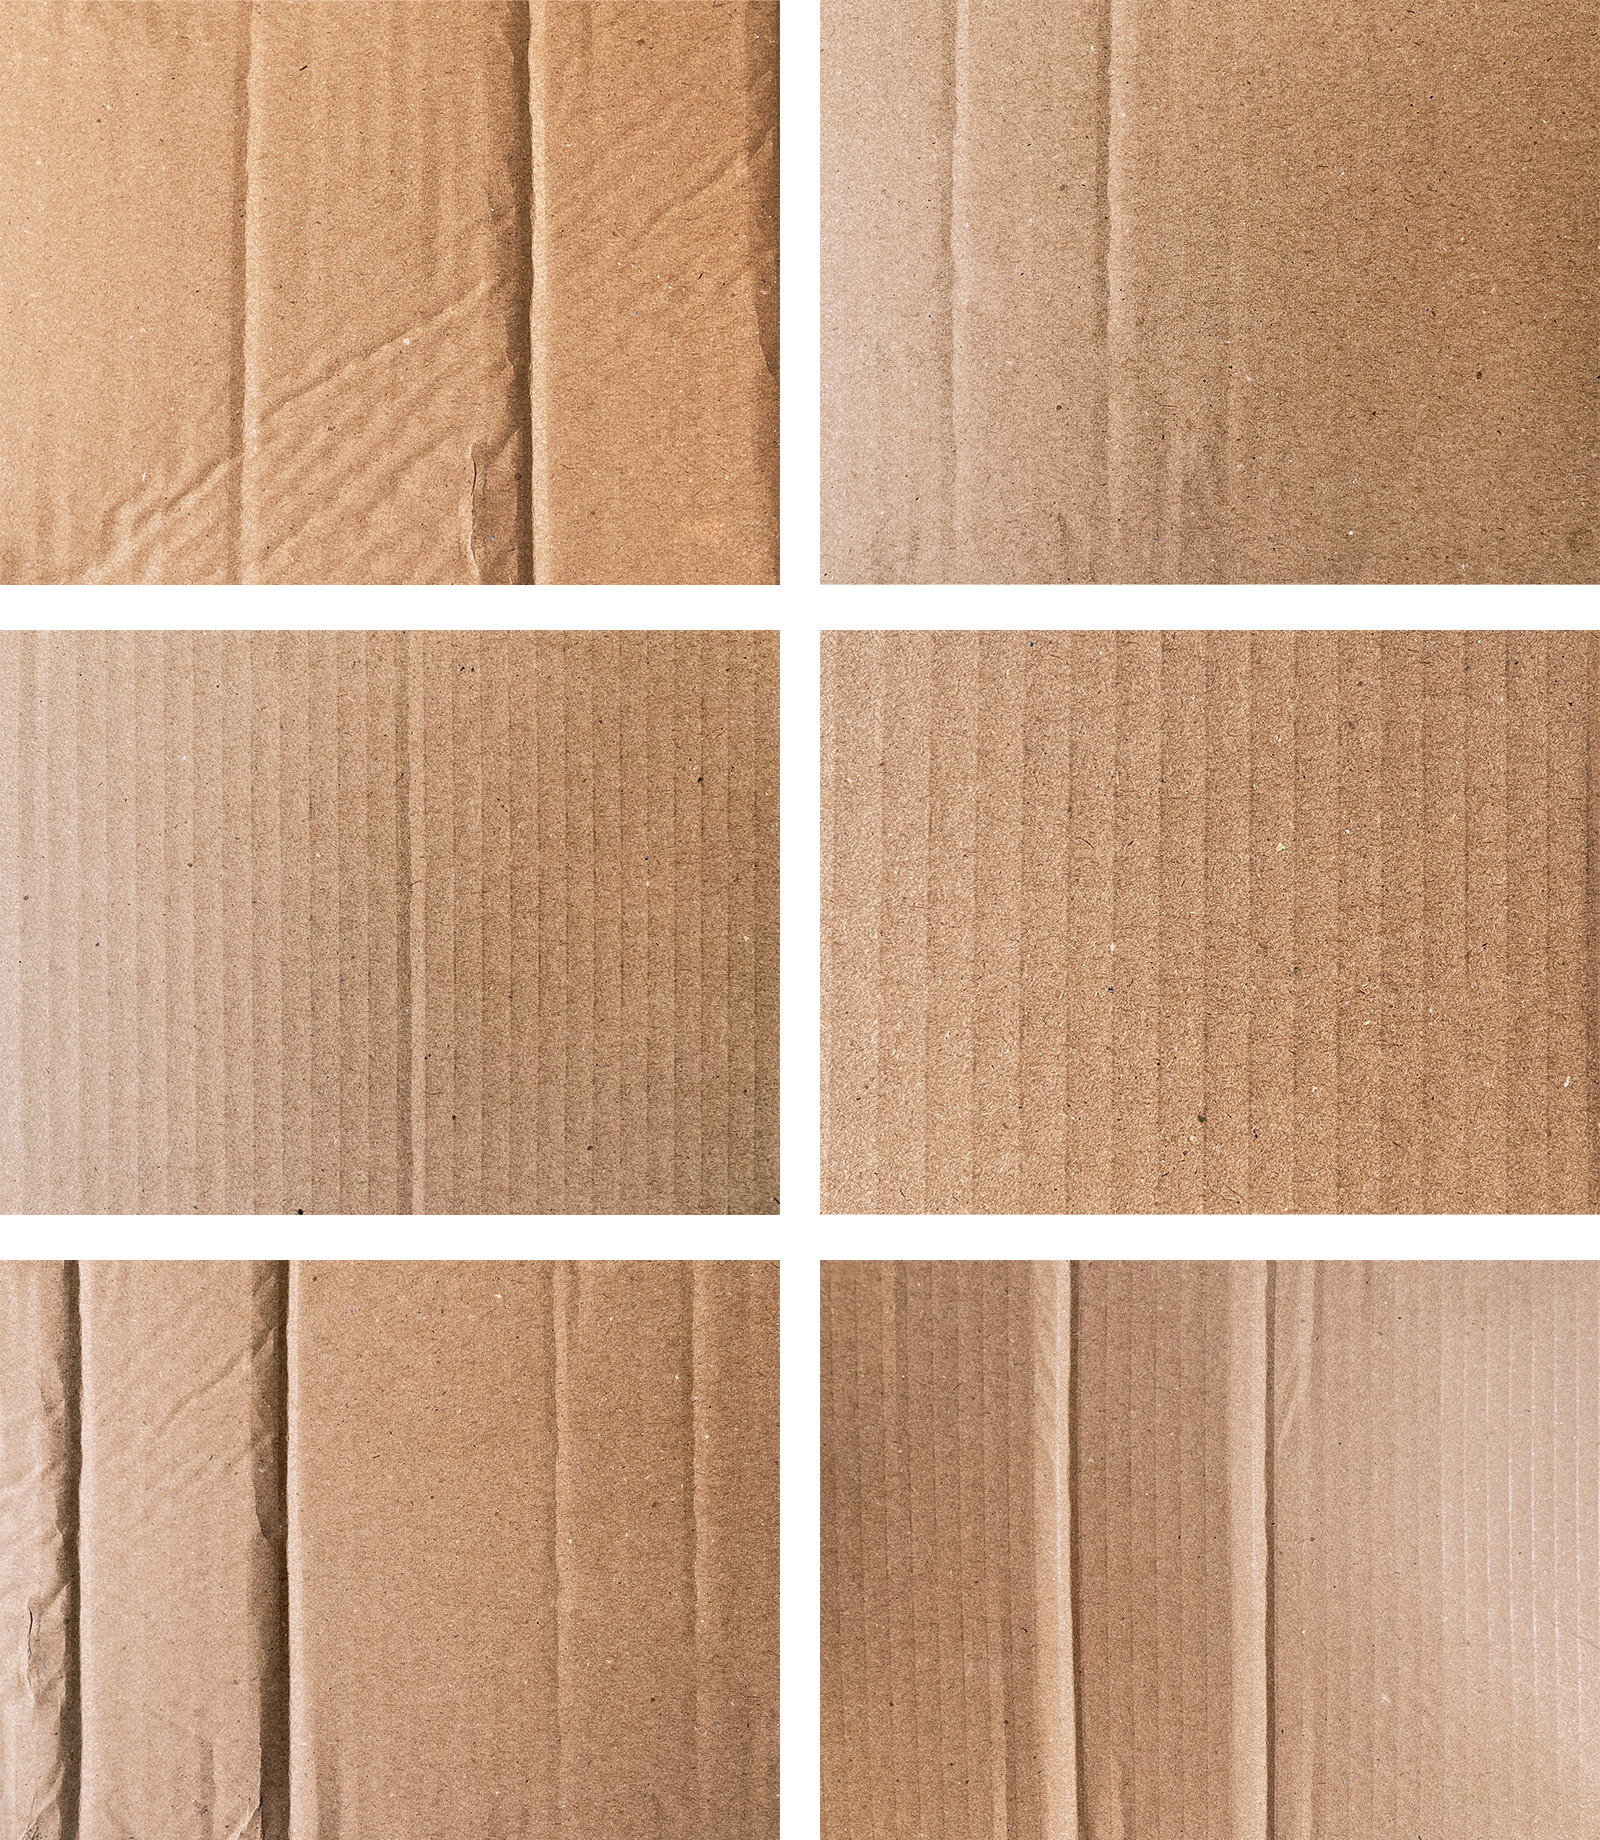 Brown cardboard paper textures